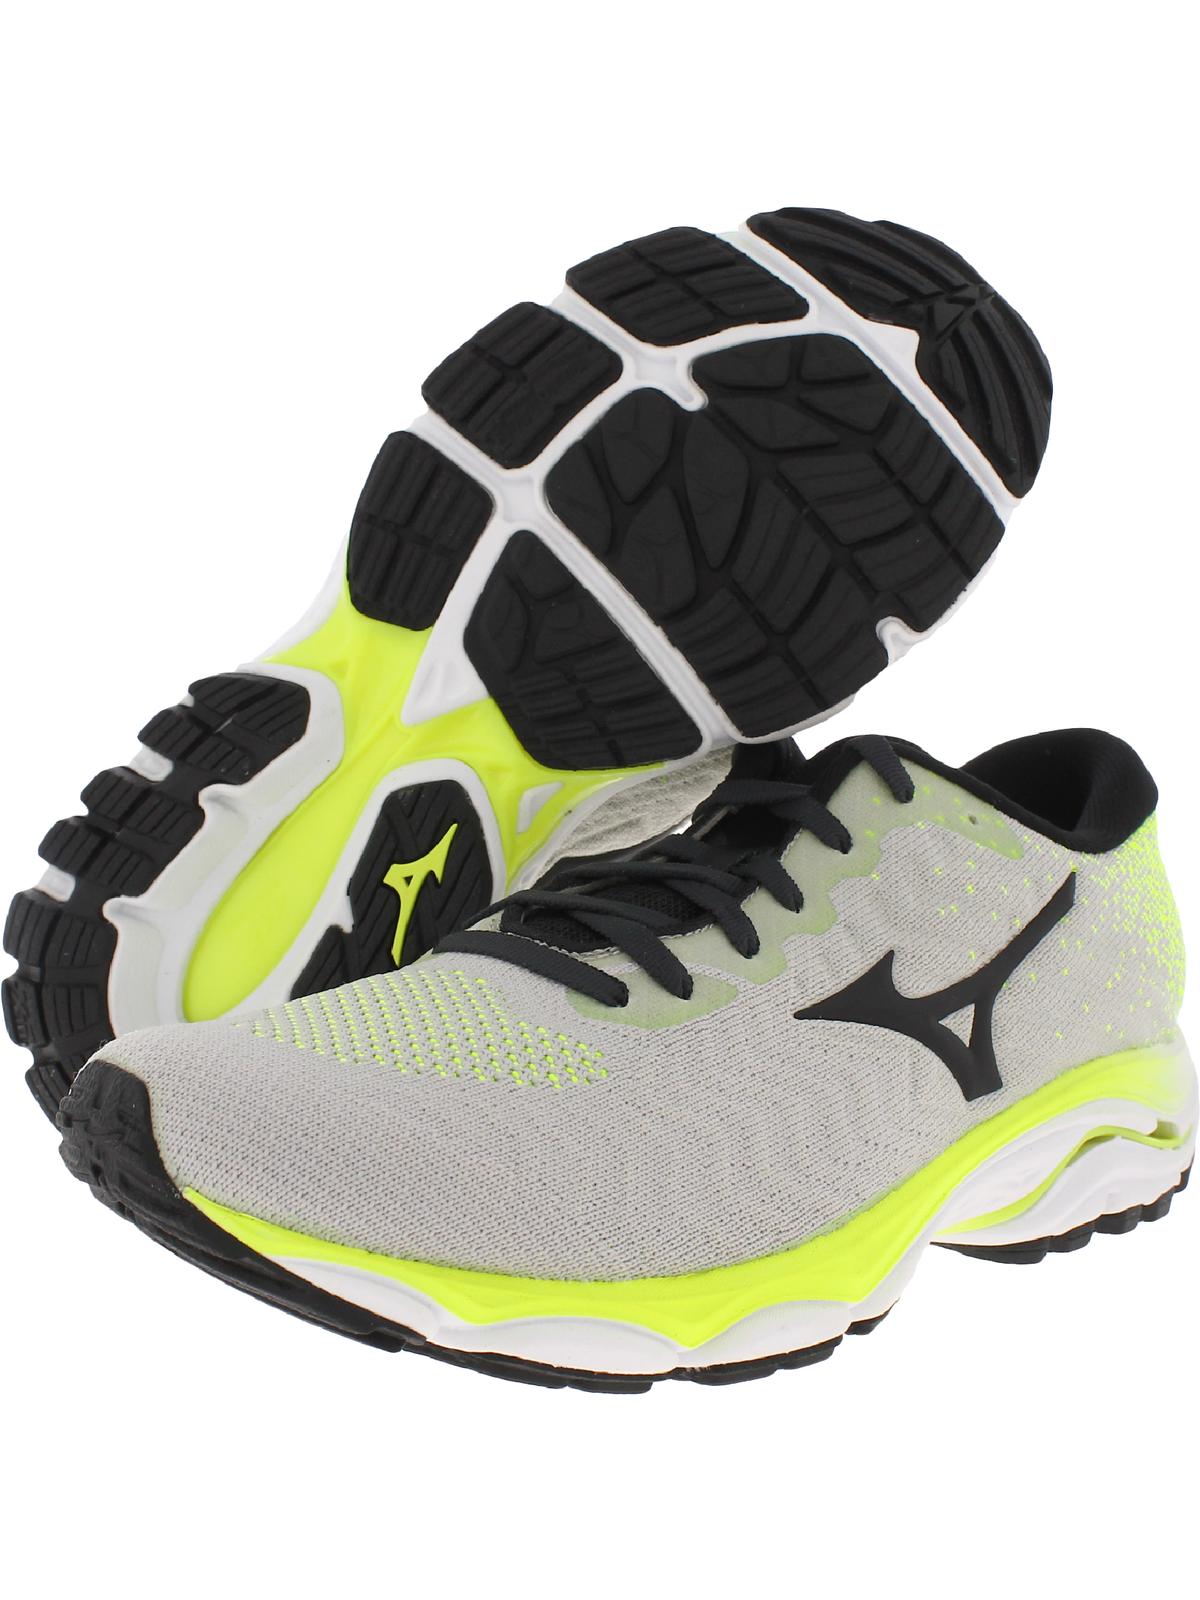 Mizuno Men's Wave Inspire 16 Waveknit™ Running Shoe, Size 8, Skydiver-Silver (Sd73) - image 2 of 3